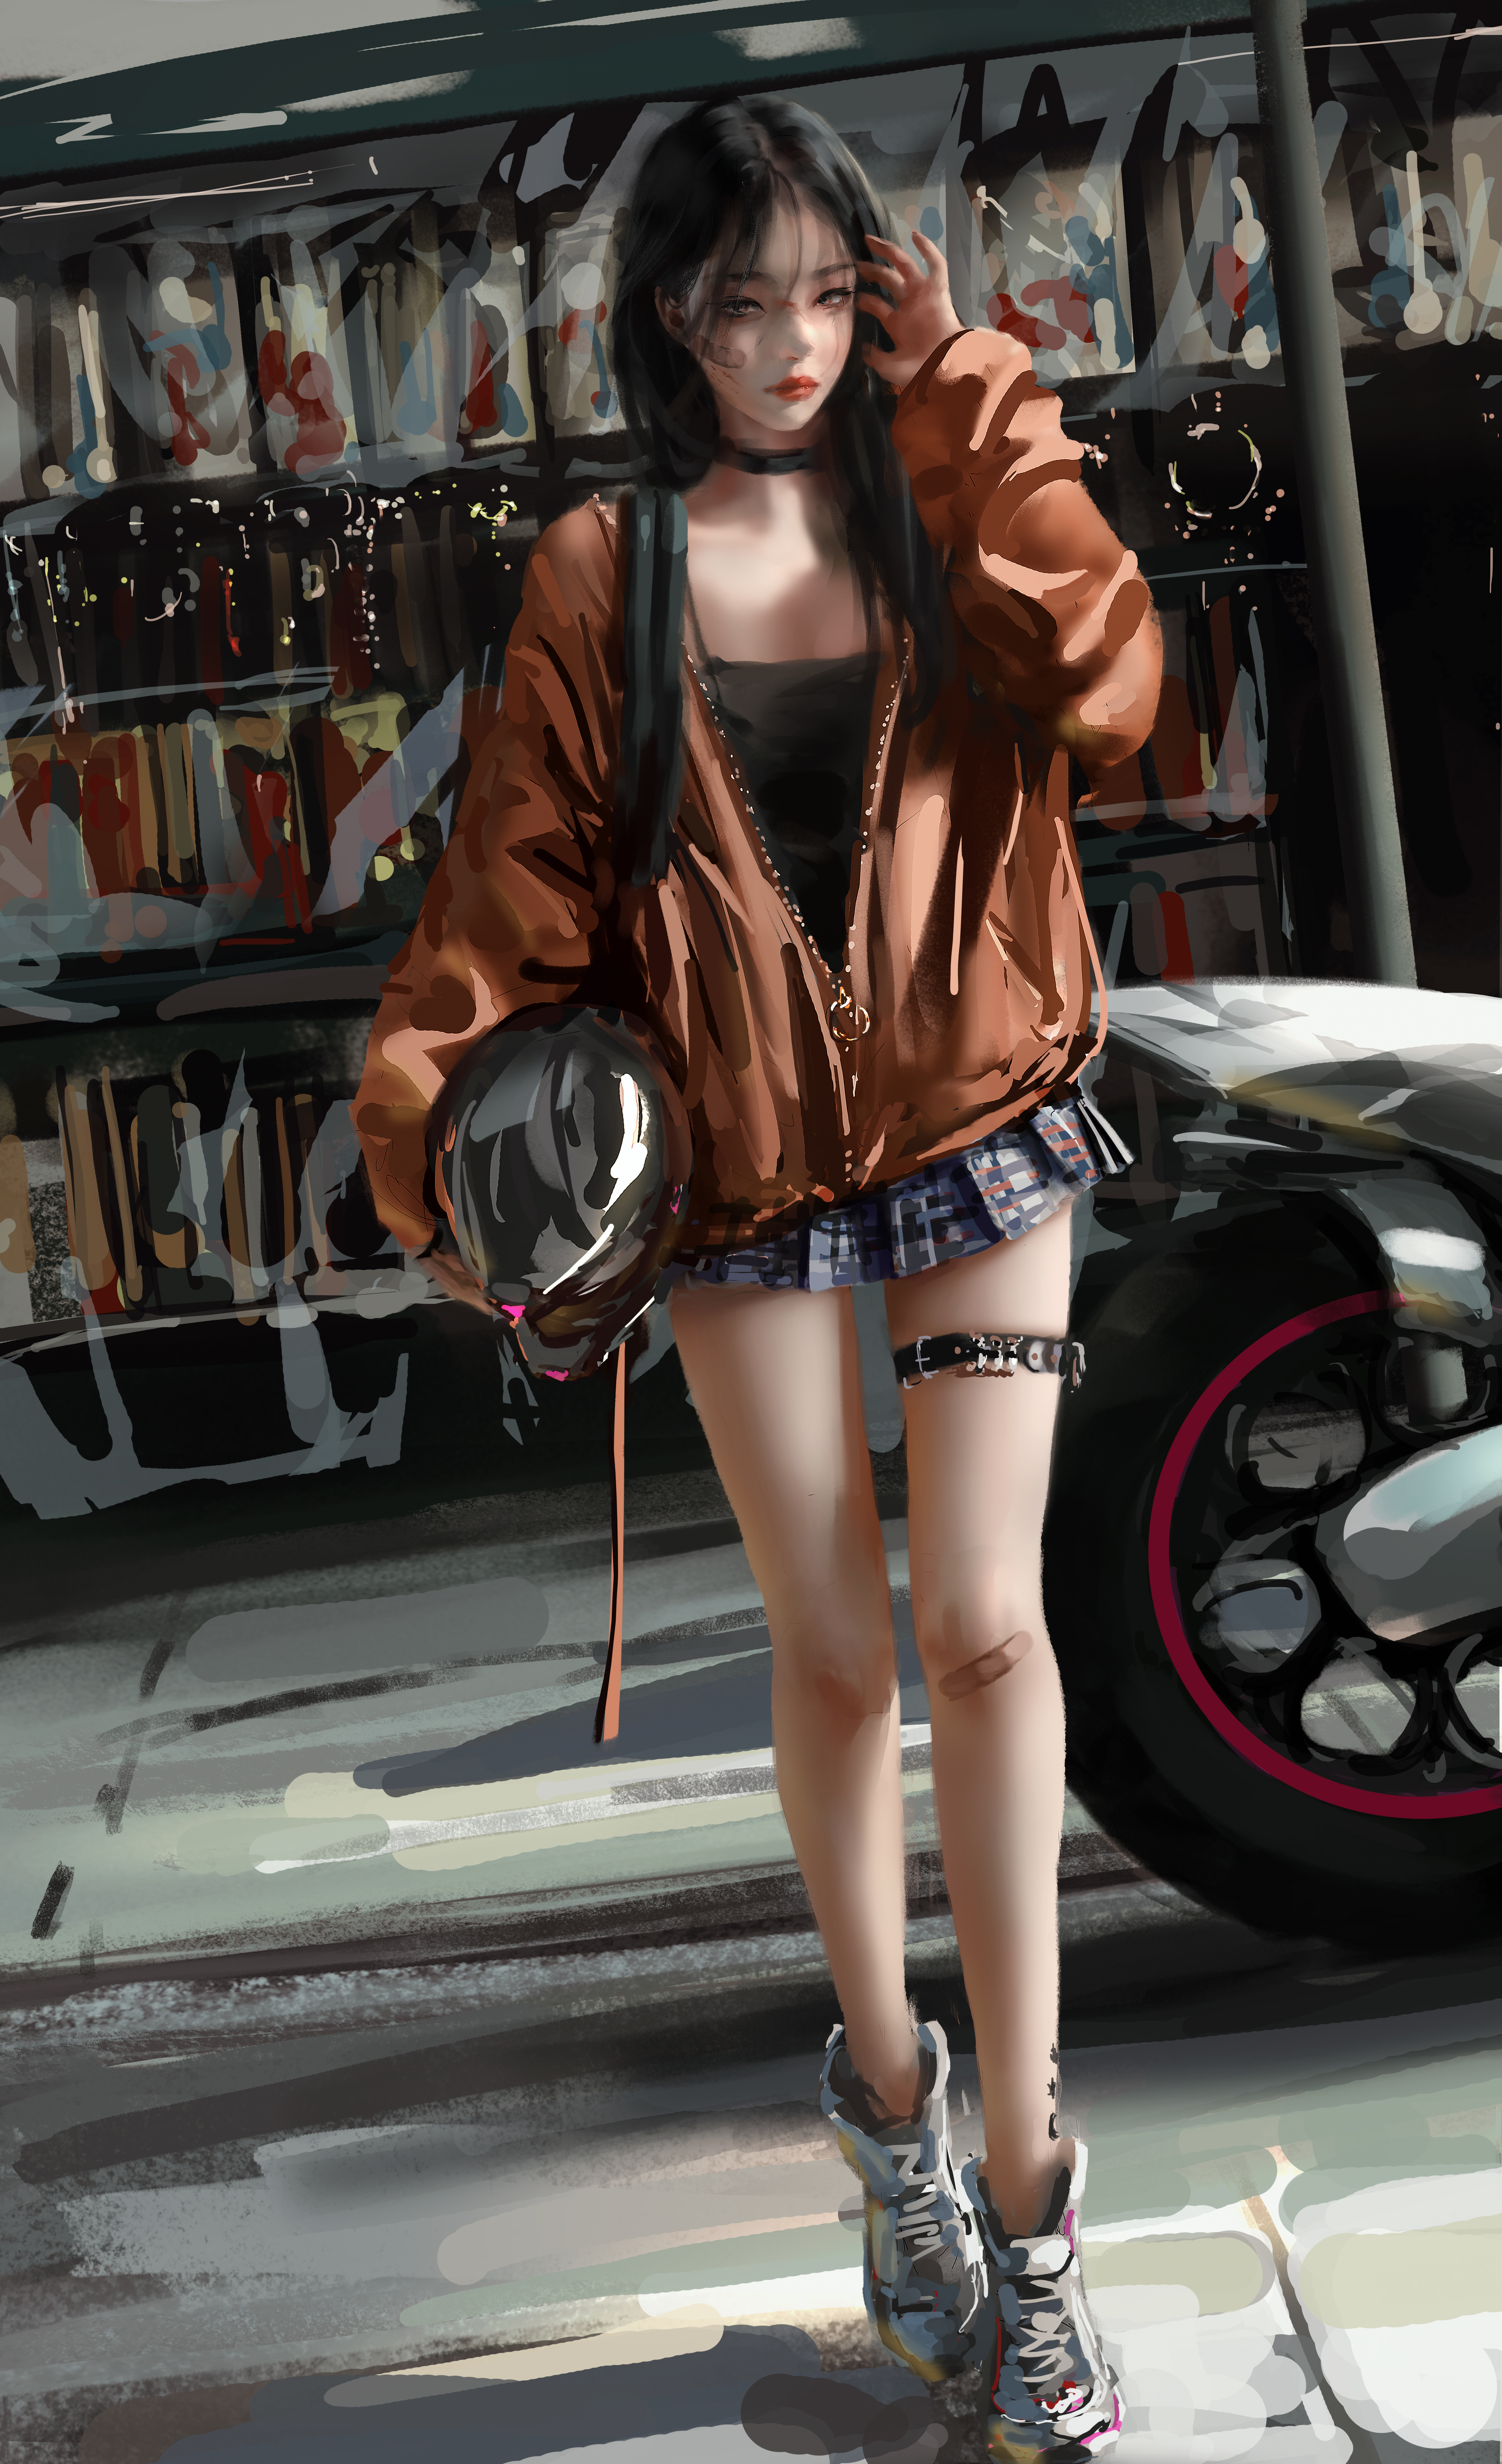 Realistic WLOP Asian Black Hair Helmet Motorcycle Women Artwork 5000x8200